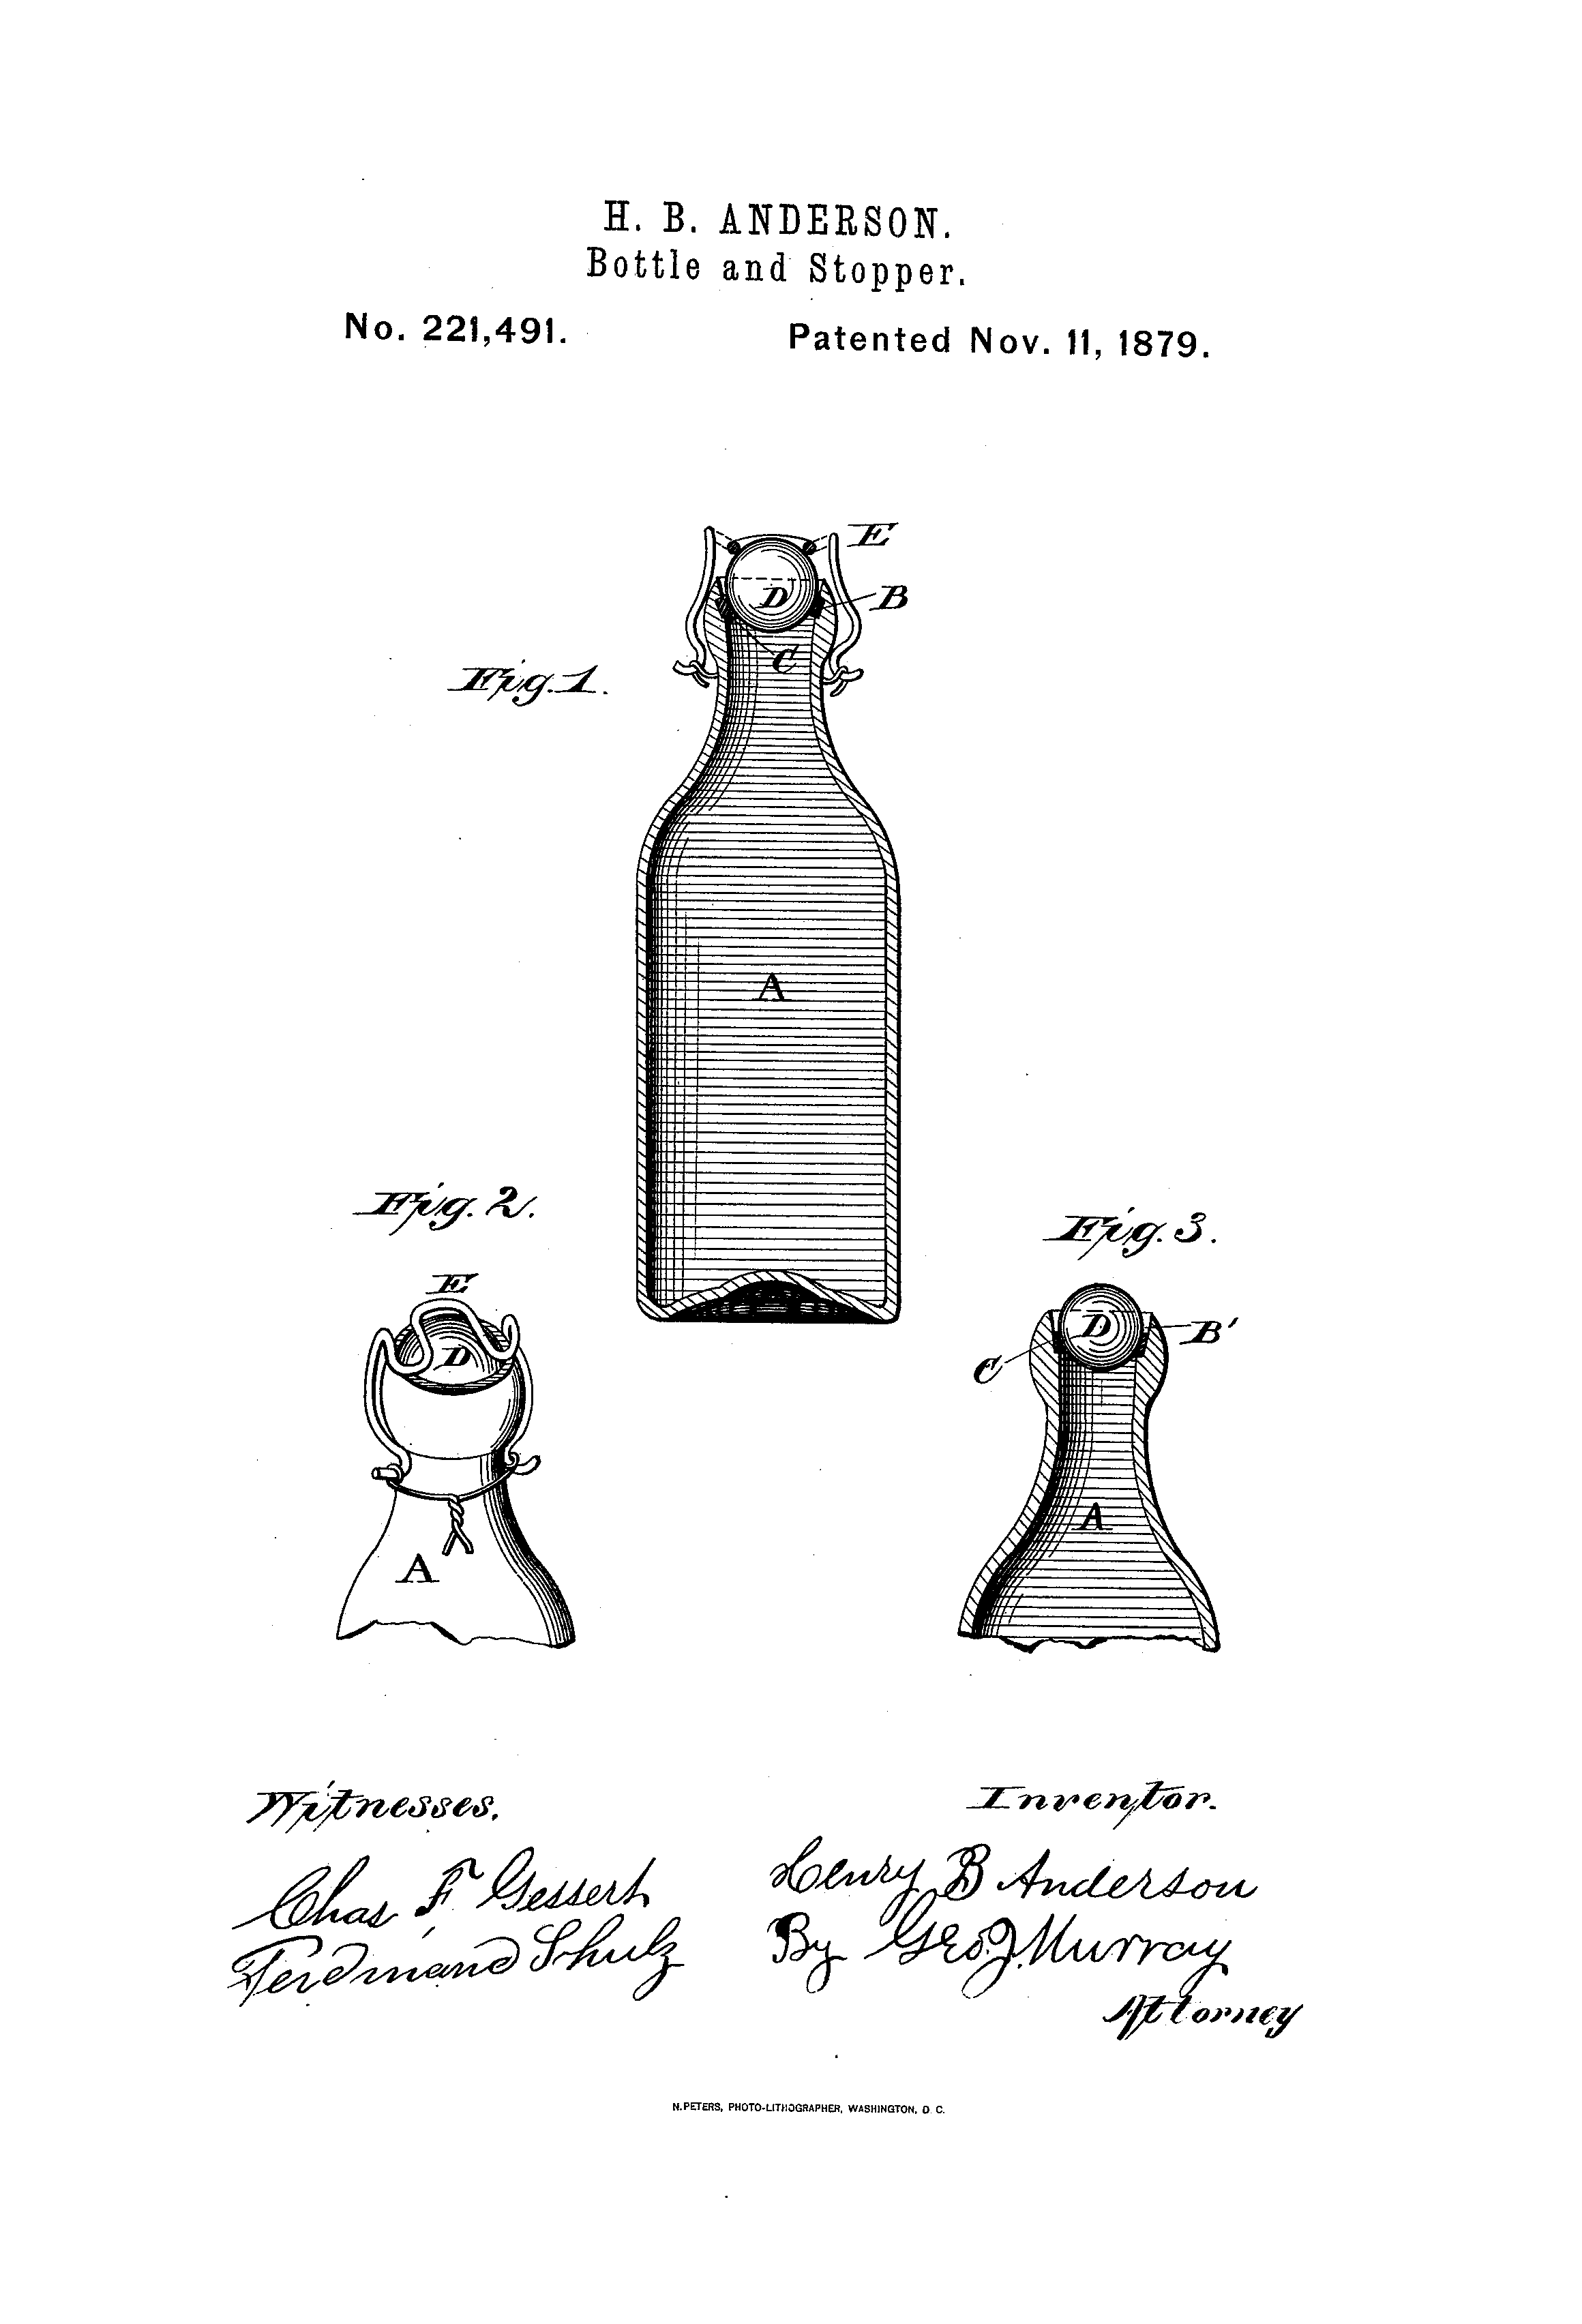 Patent 225,476